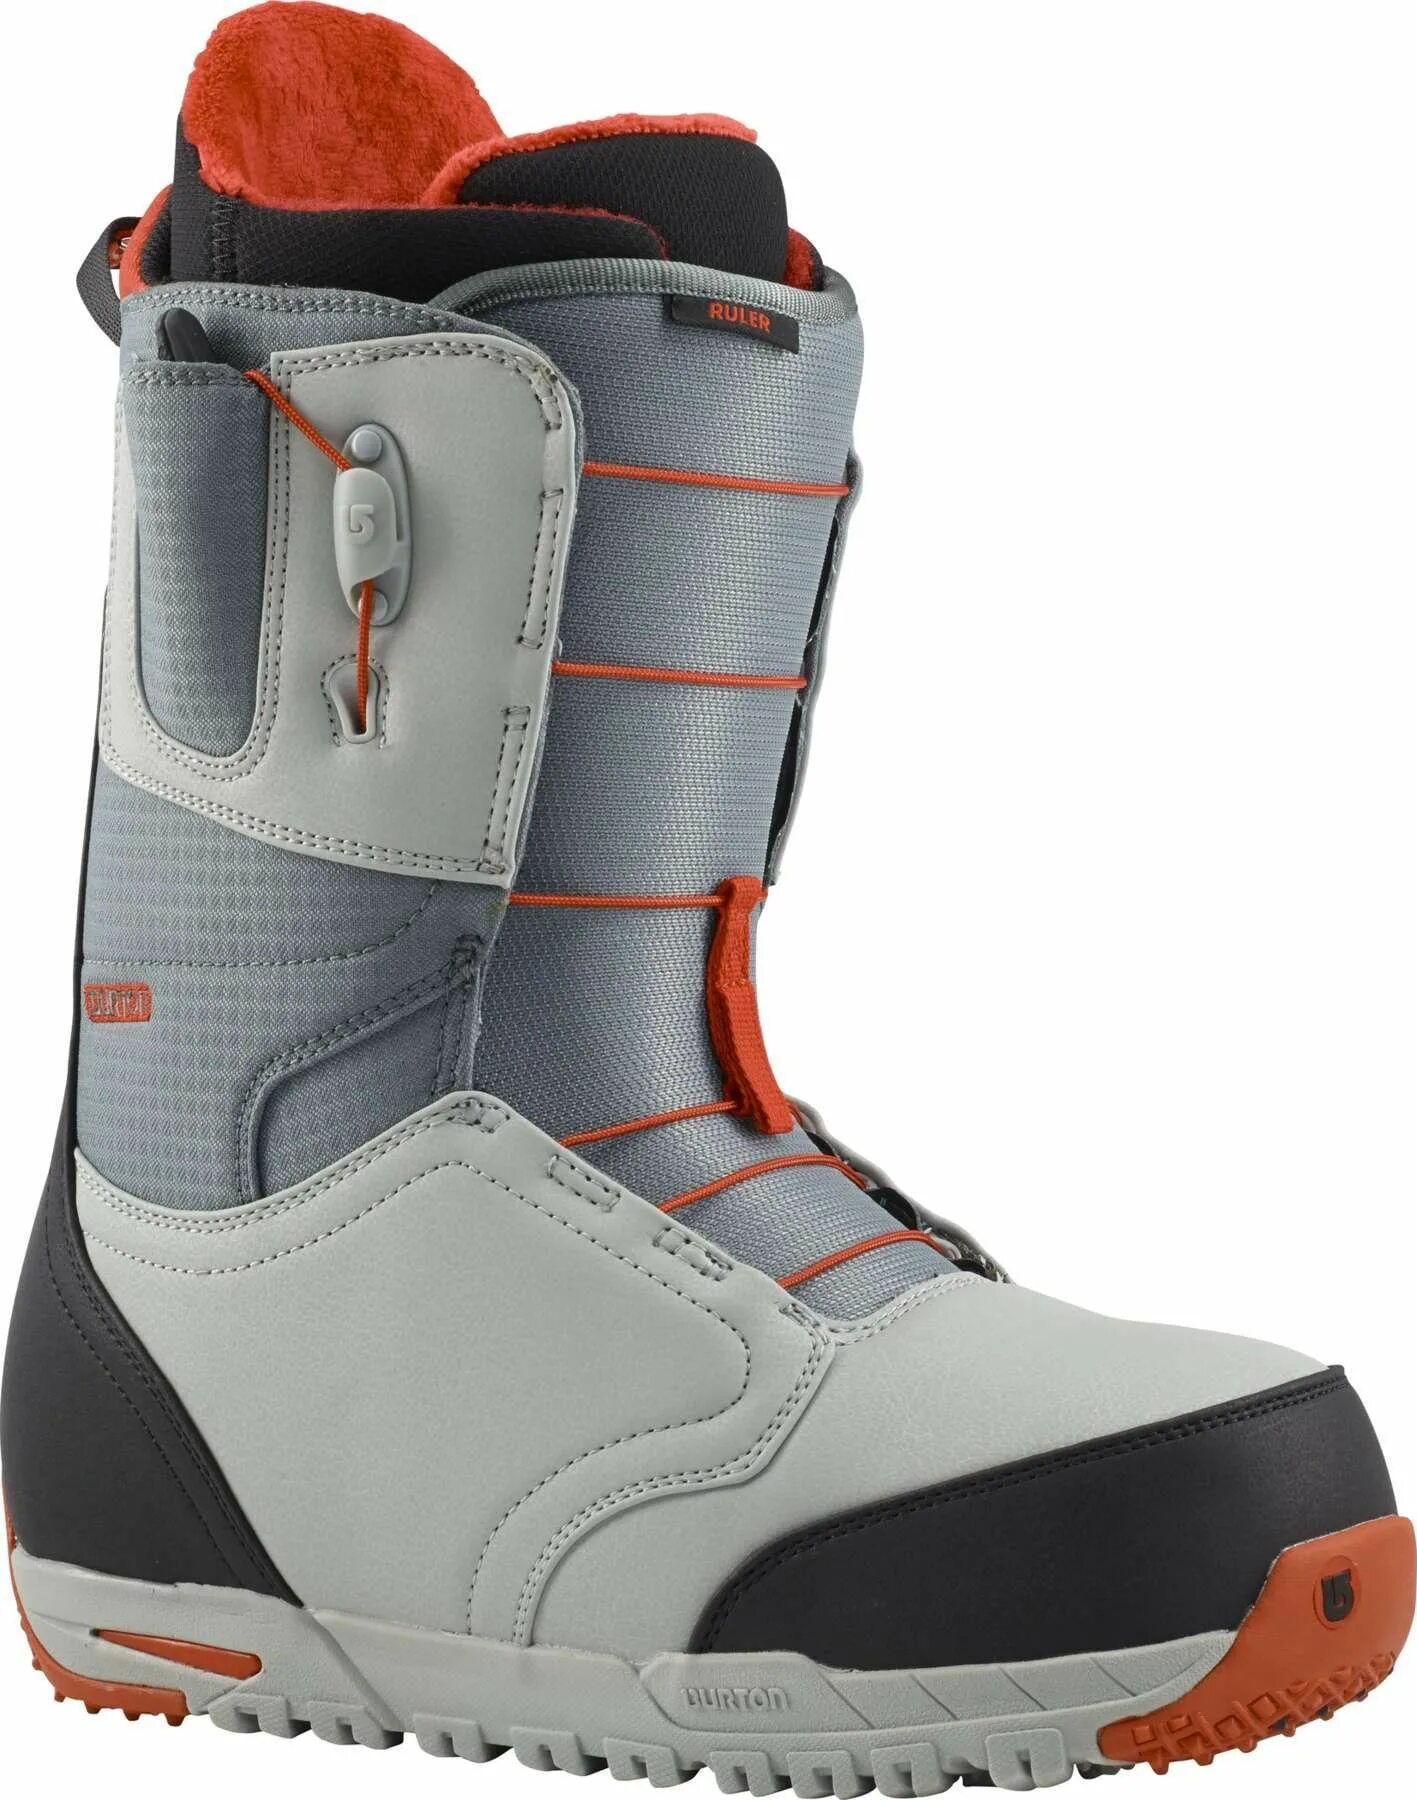 Ботинки сноубордические мужские Burton Ruler. Сноубордические ботинки Burton Snowboard Boots 2018/2020. Ботинки для сноуборда Burton Ruler 2014. Сноуборд ботинки Бертона Руллер. Burton ruler